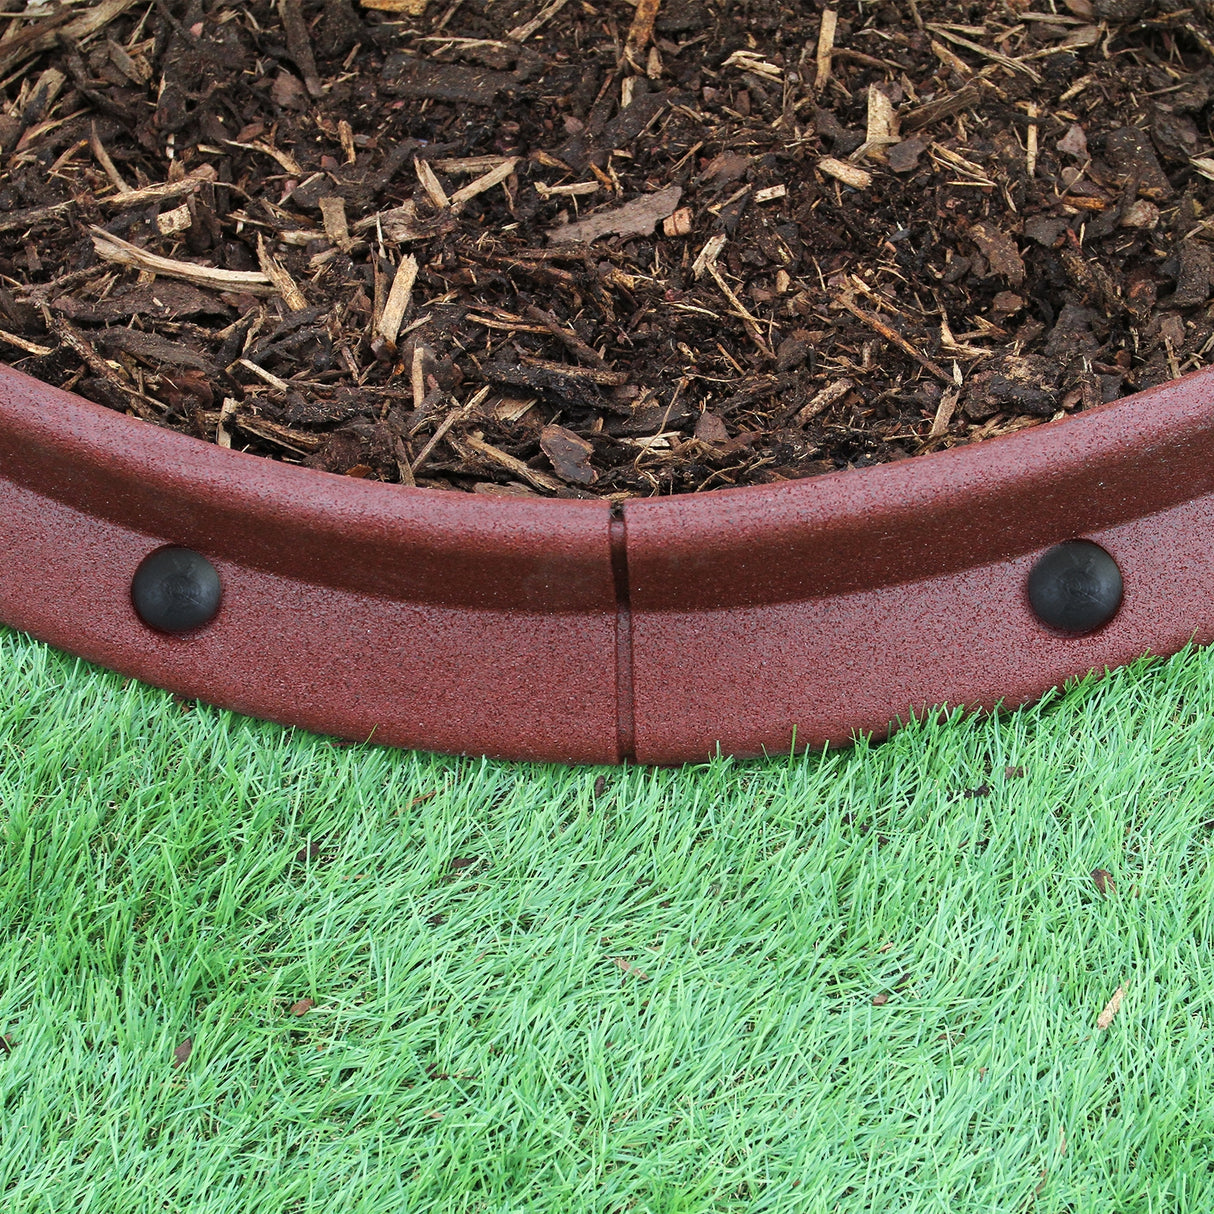 Flexible Lawn Edging Terracotta 1.2m x 14